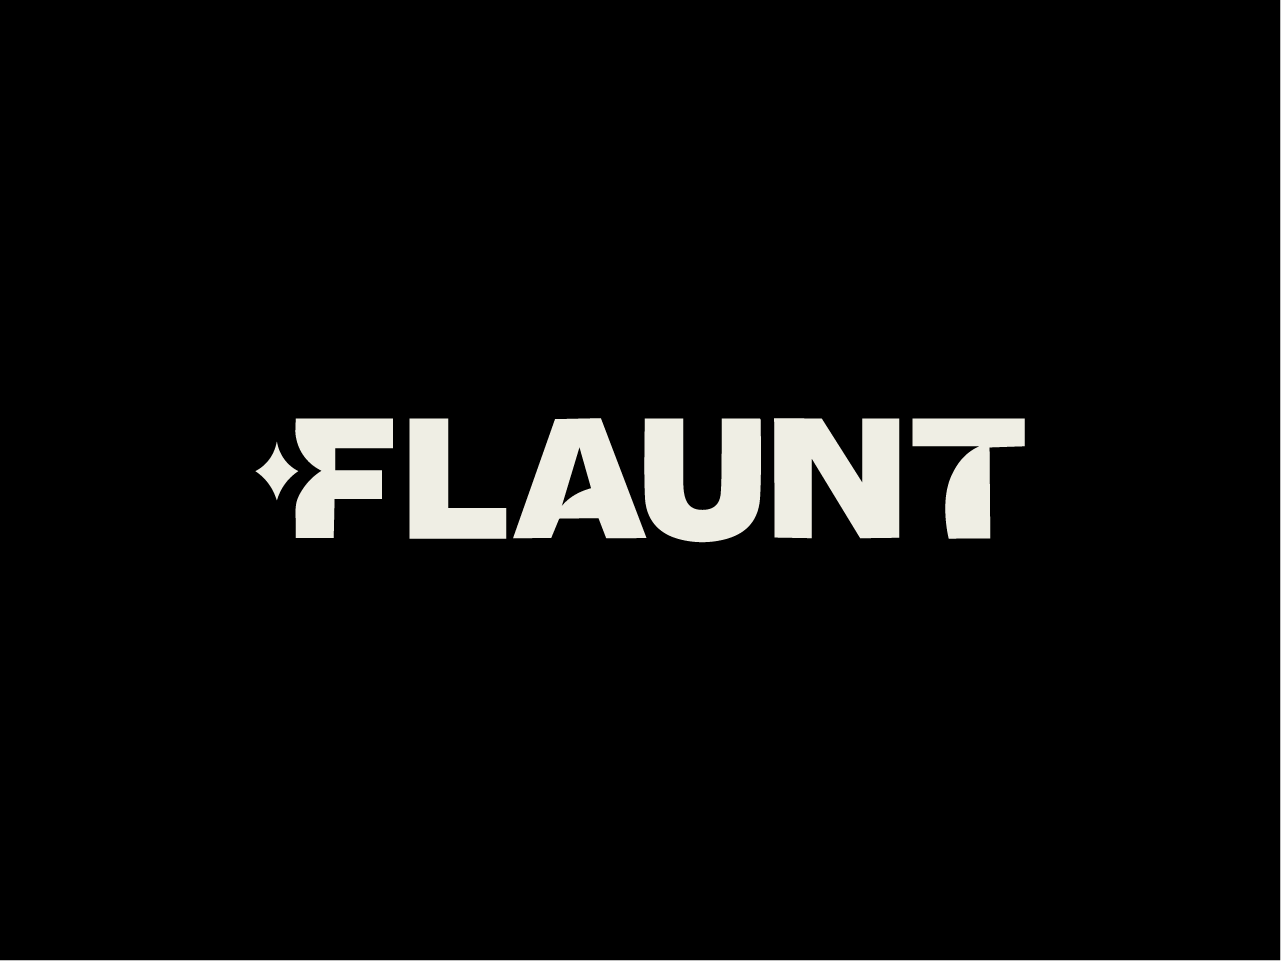 Flaunt Brand Identity by Alex Kroemer on Dribbble